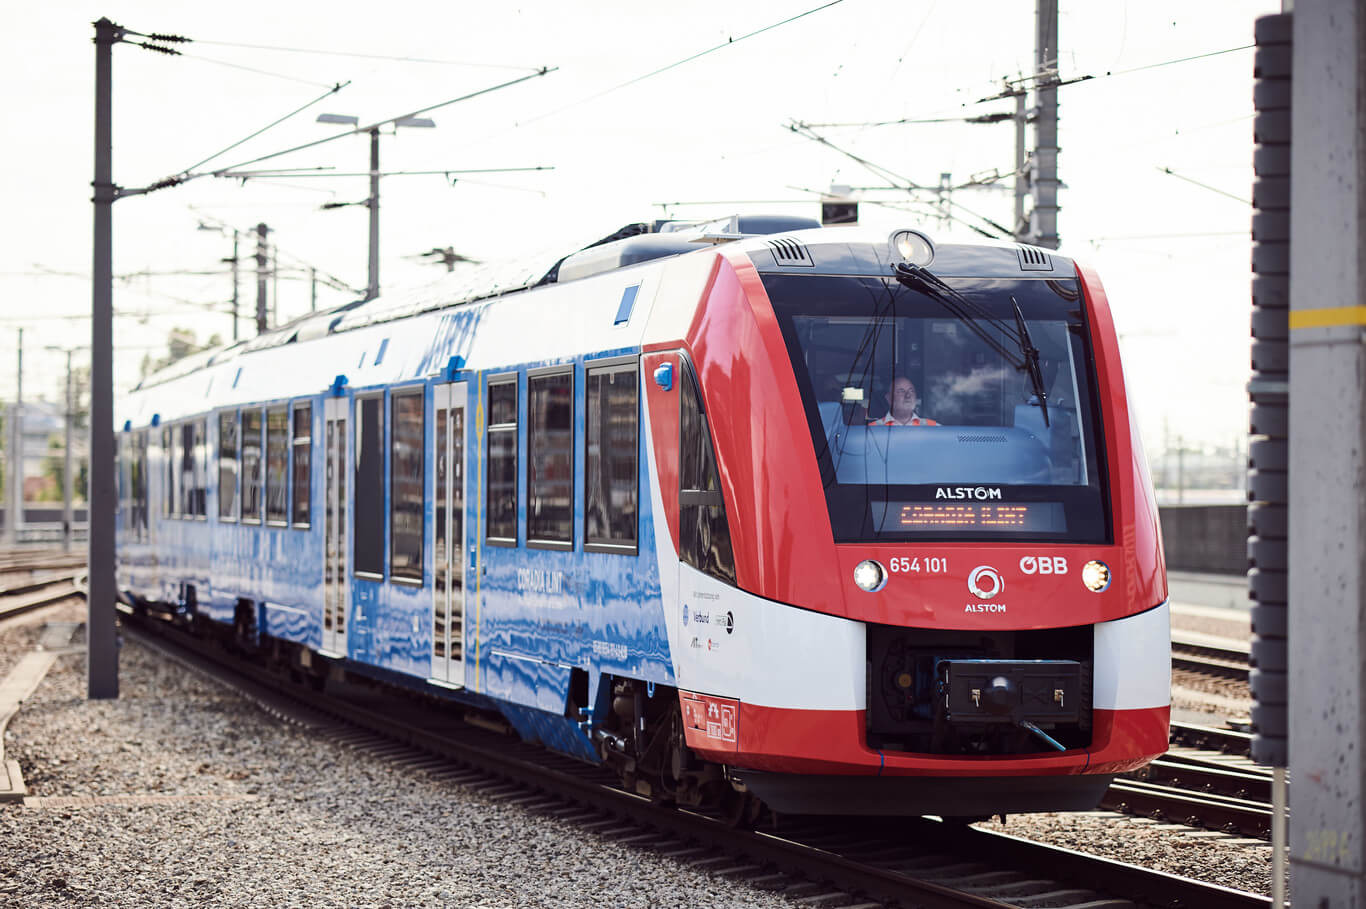 Alstom hydrogen train now operational in Austria